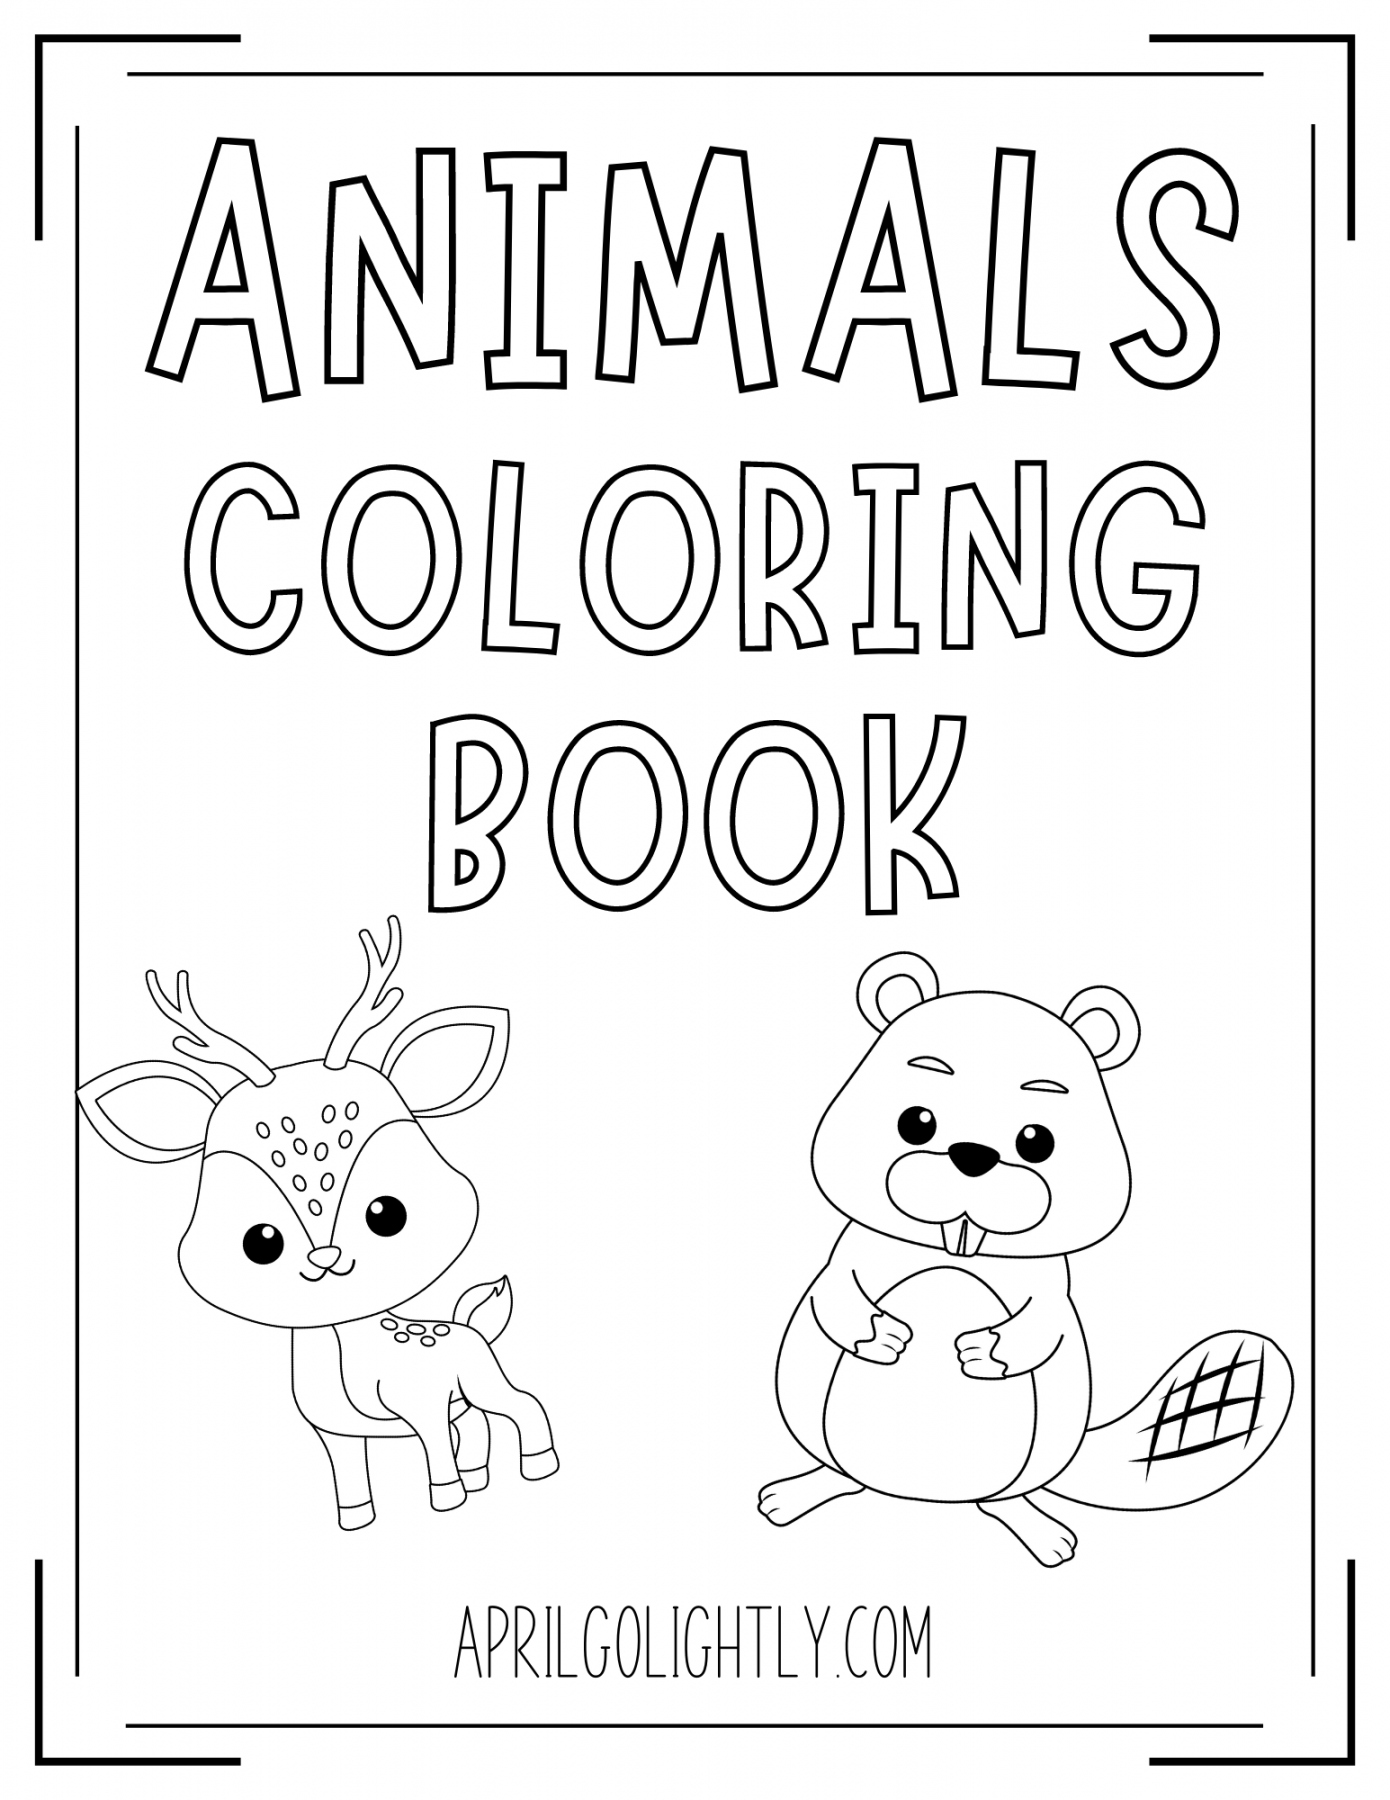 Free Printable Animal Coloring Pages - Printable - FREE Printable Animals Coloring Book - April Golightly